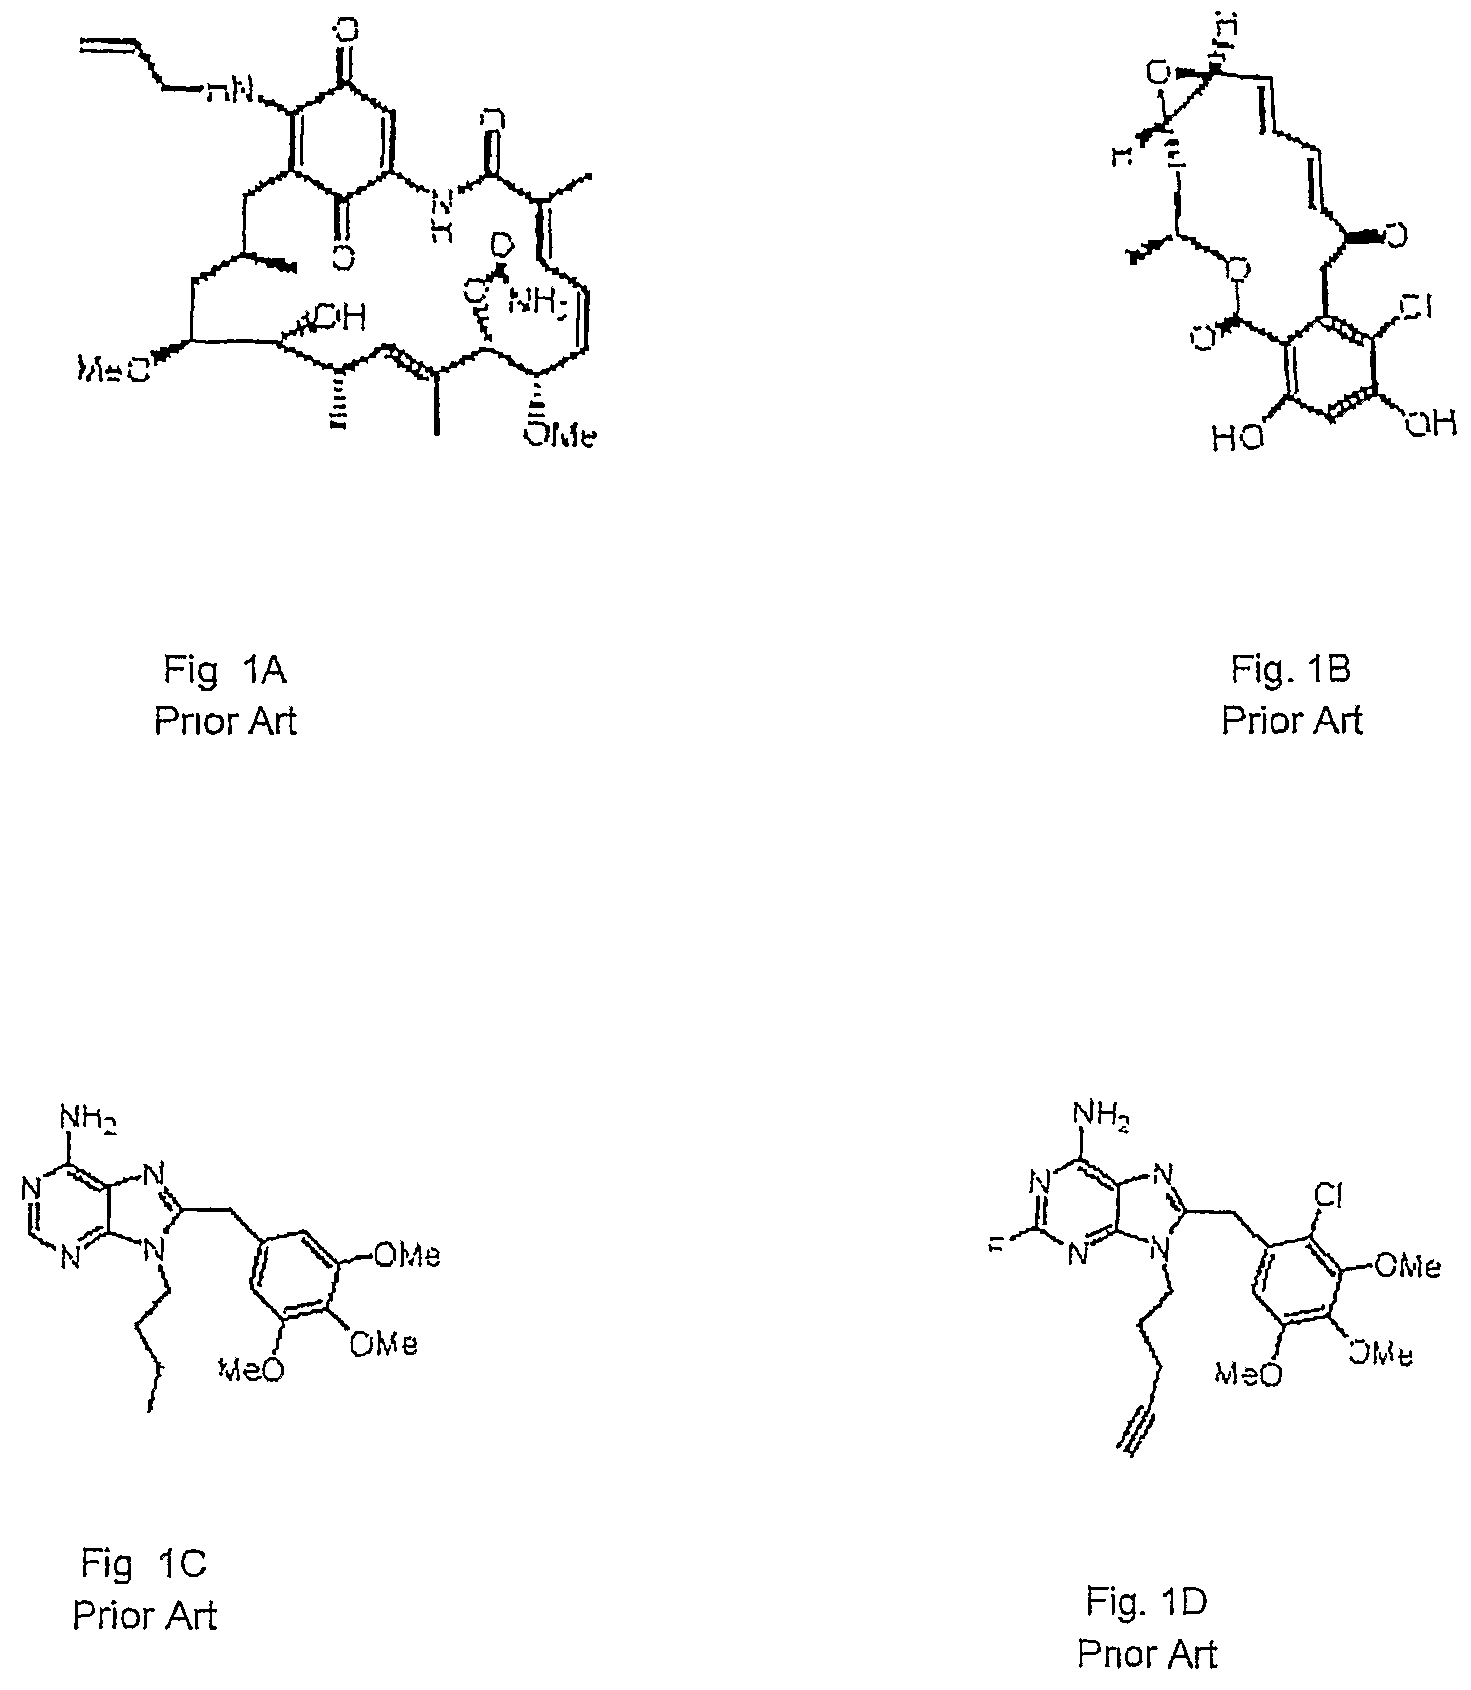 Small-molecule Hsp90 inhibitors